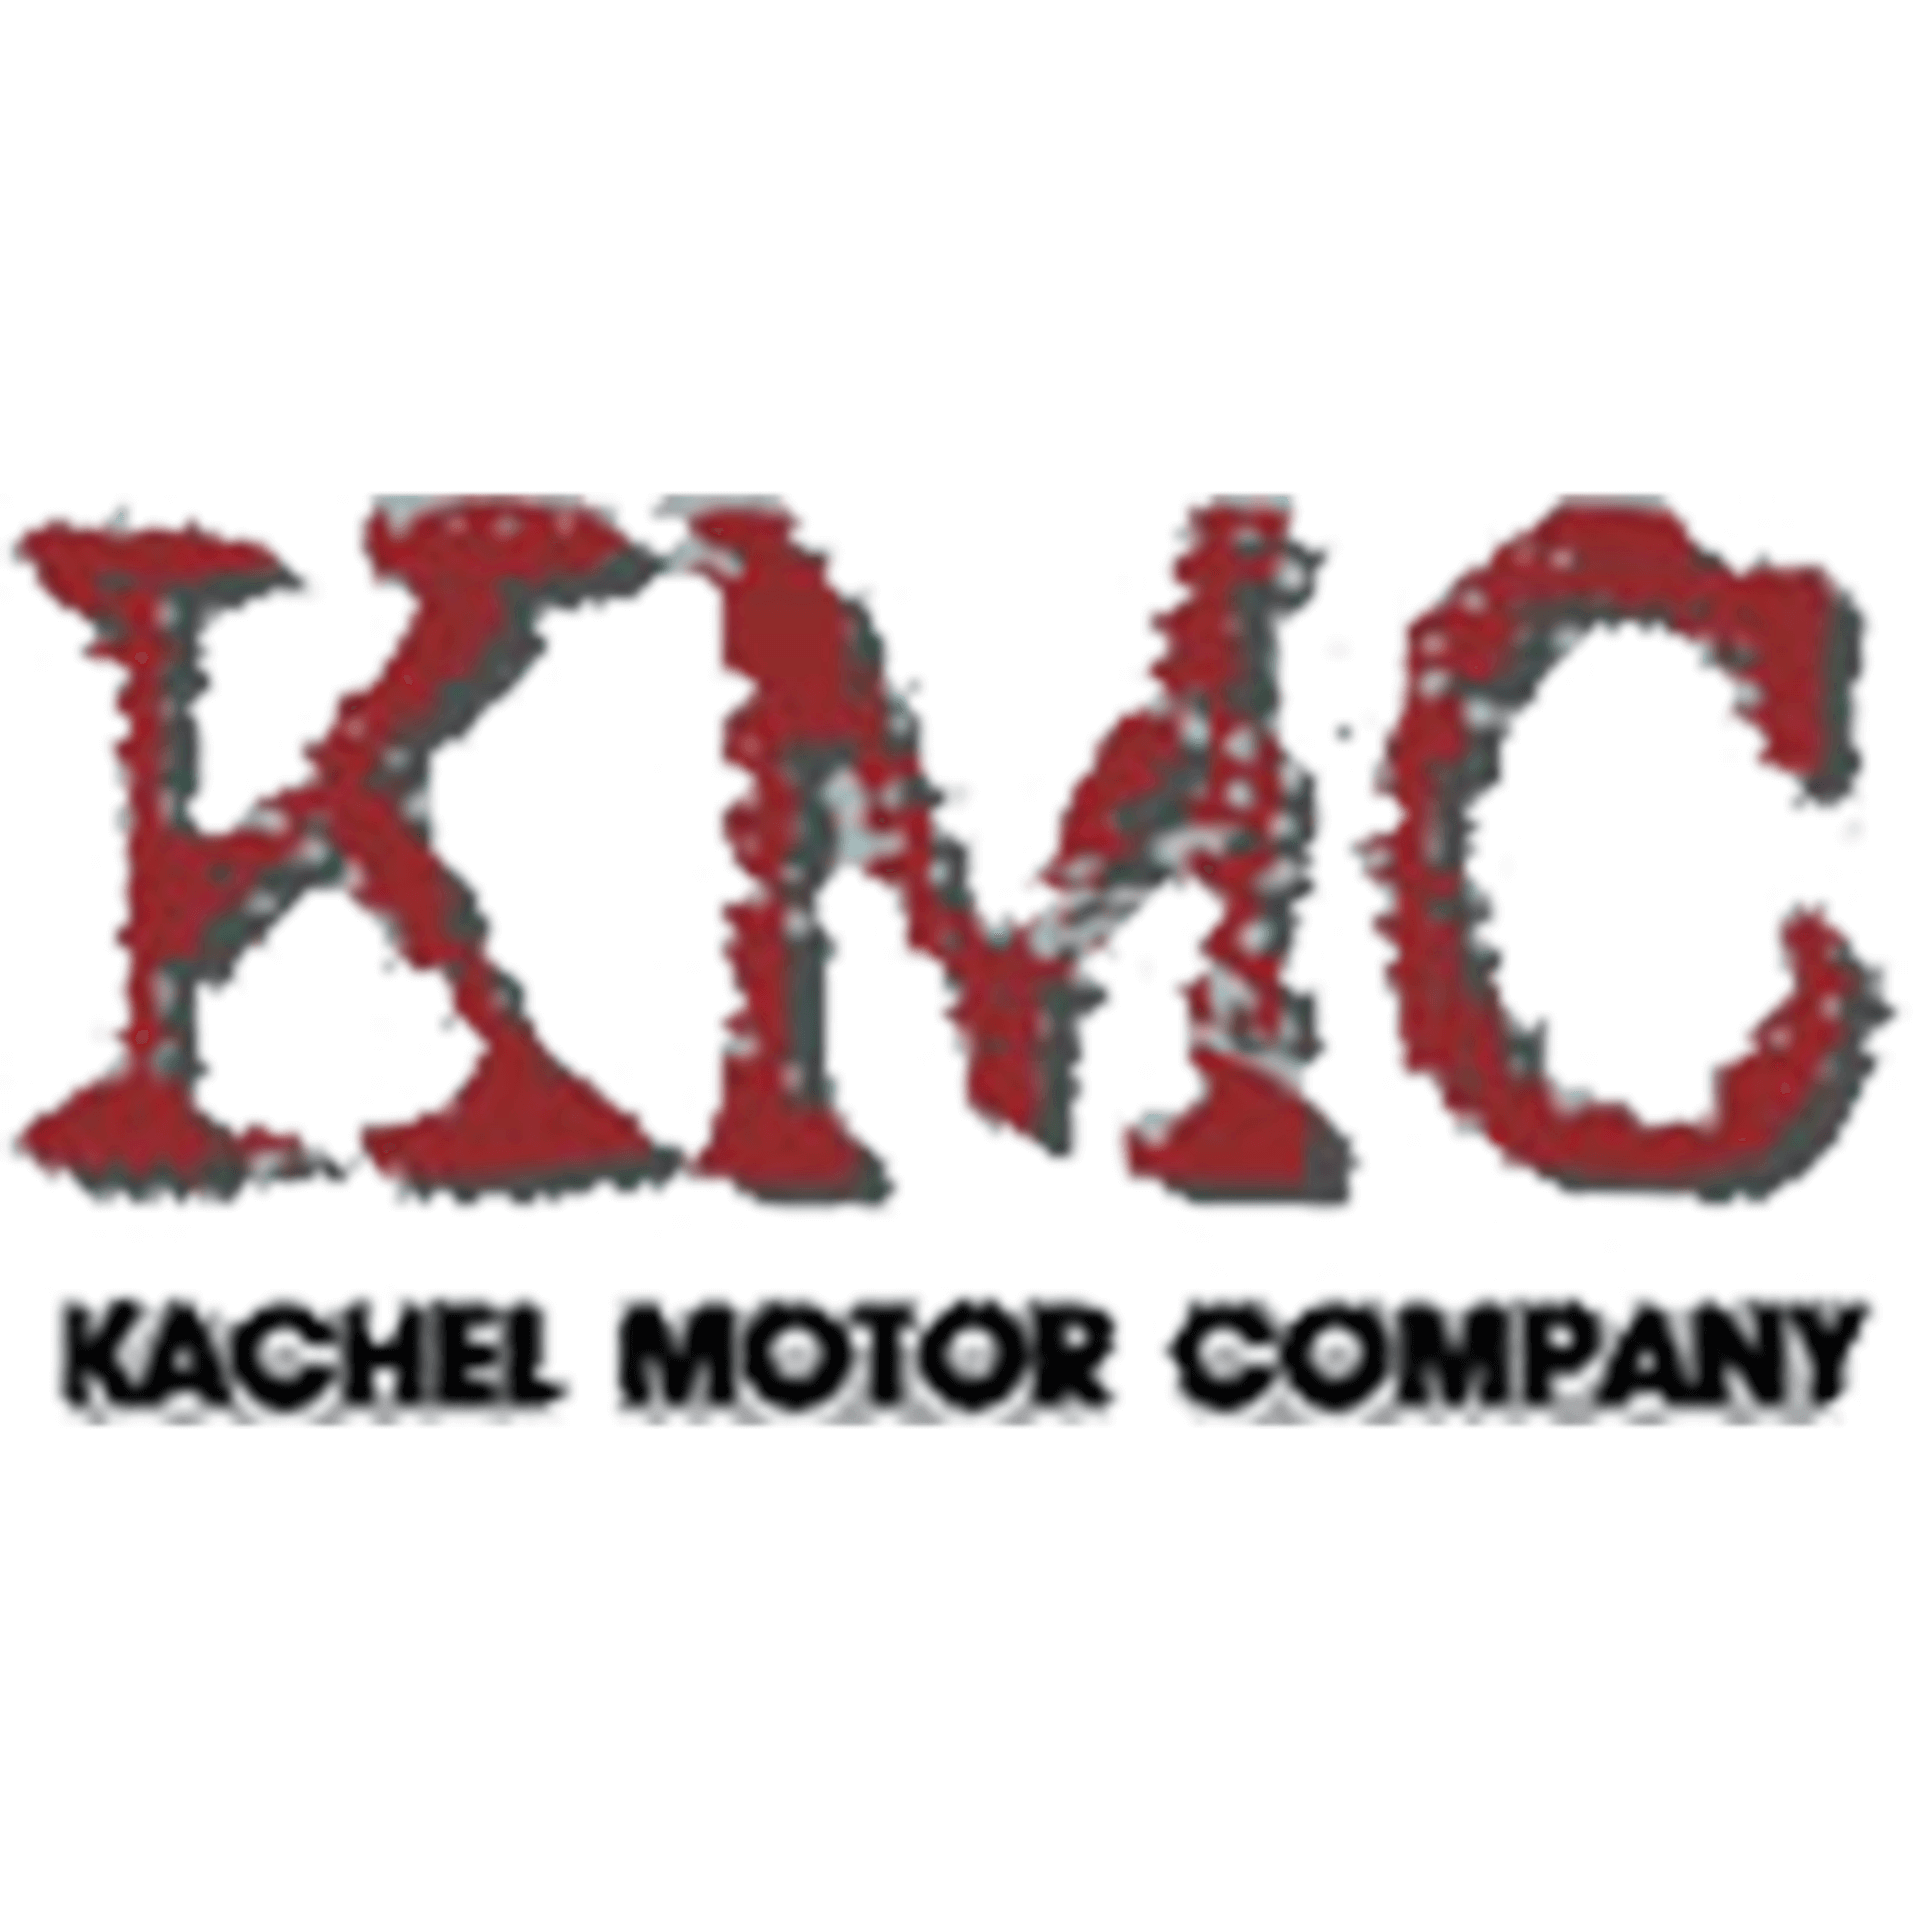 Kachel Motor Company